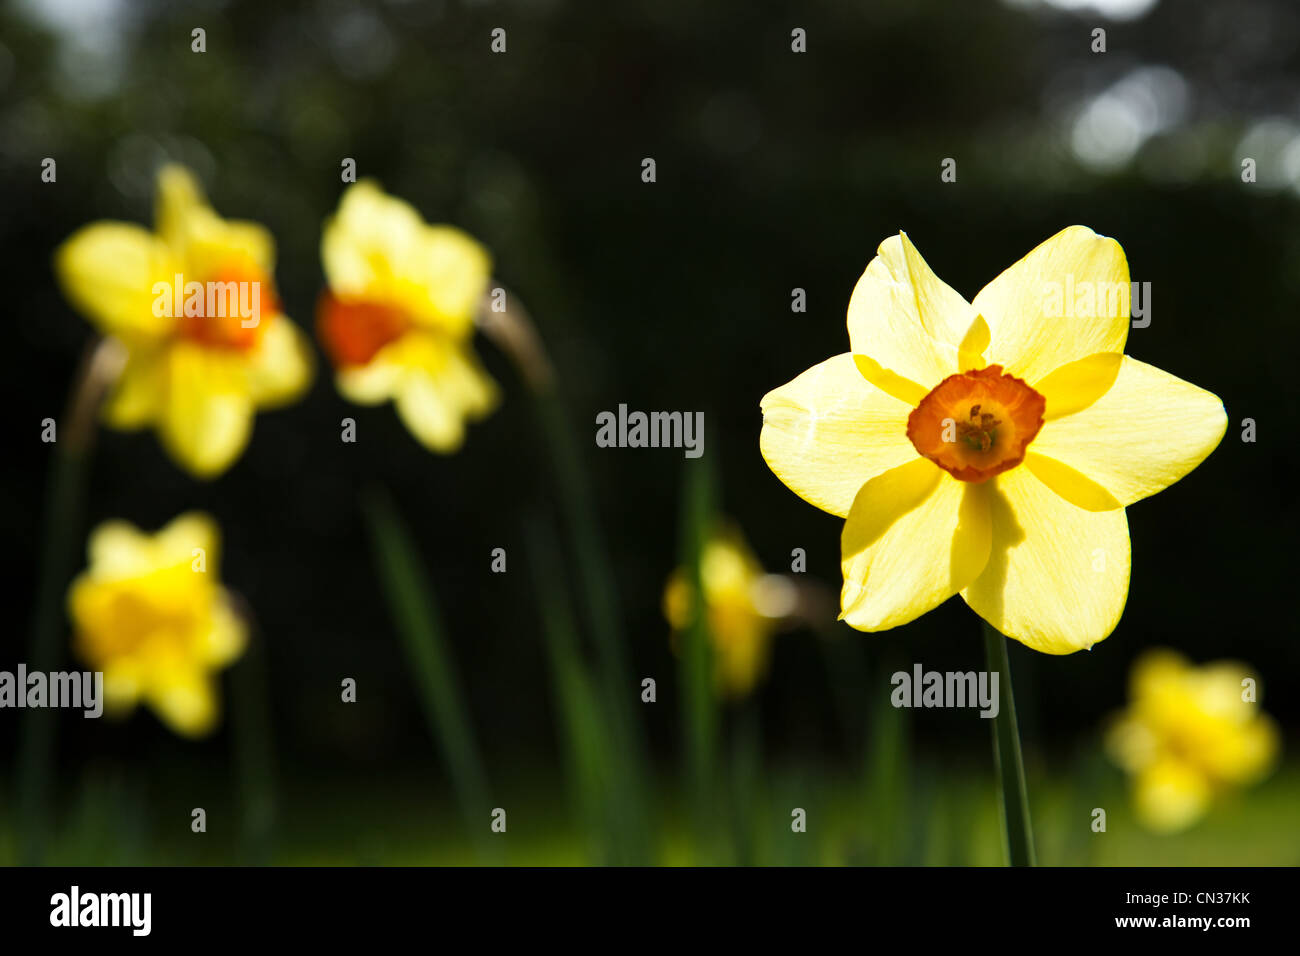 Daffodils, close up Stock Photo